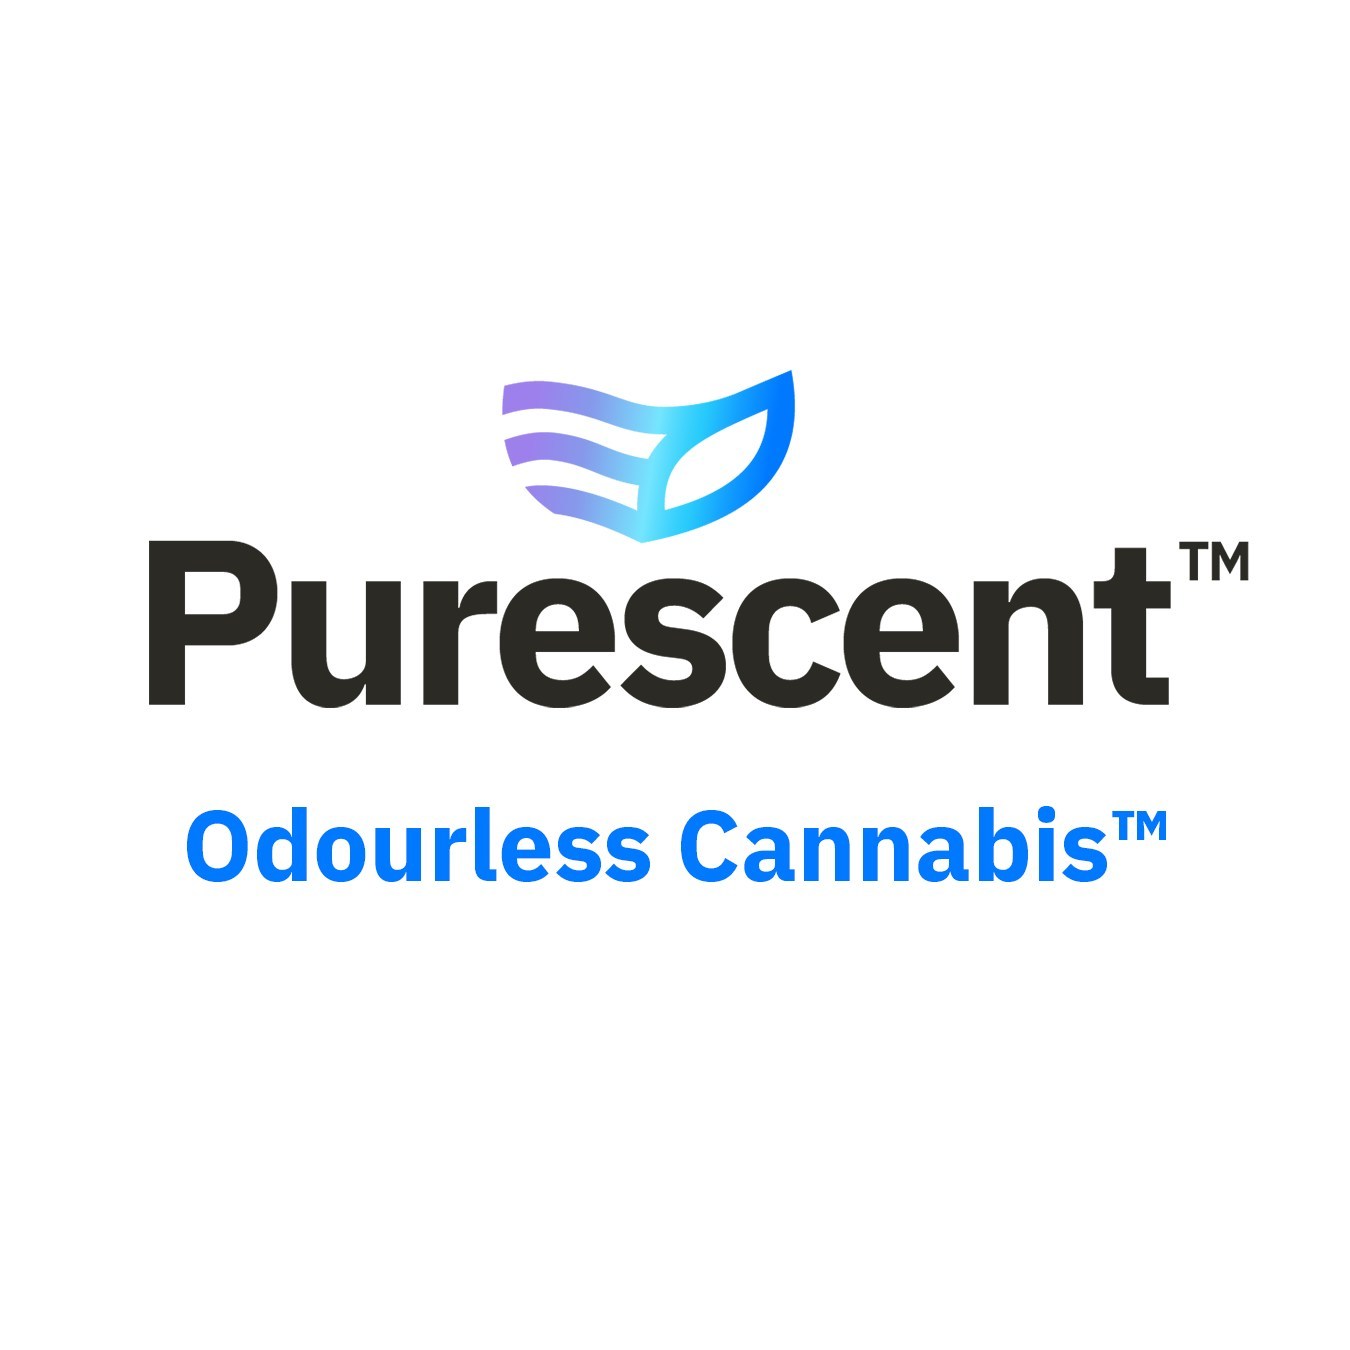 PureScent logo